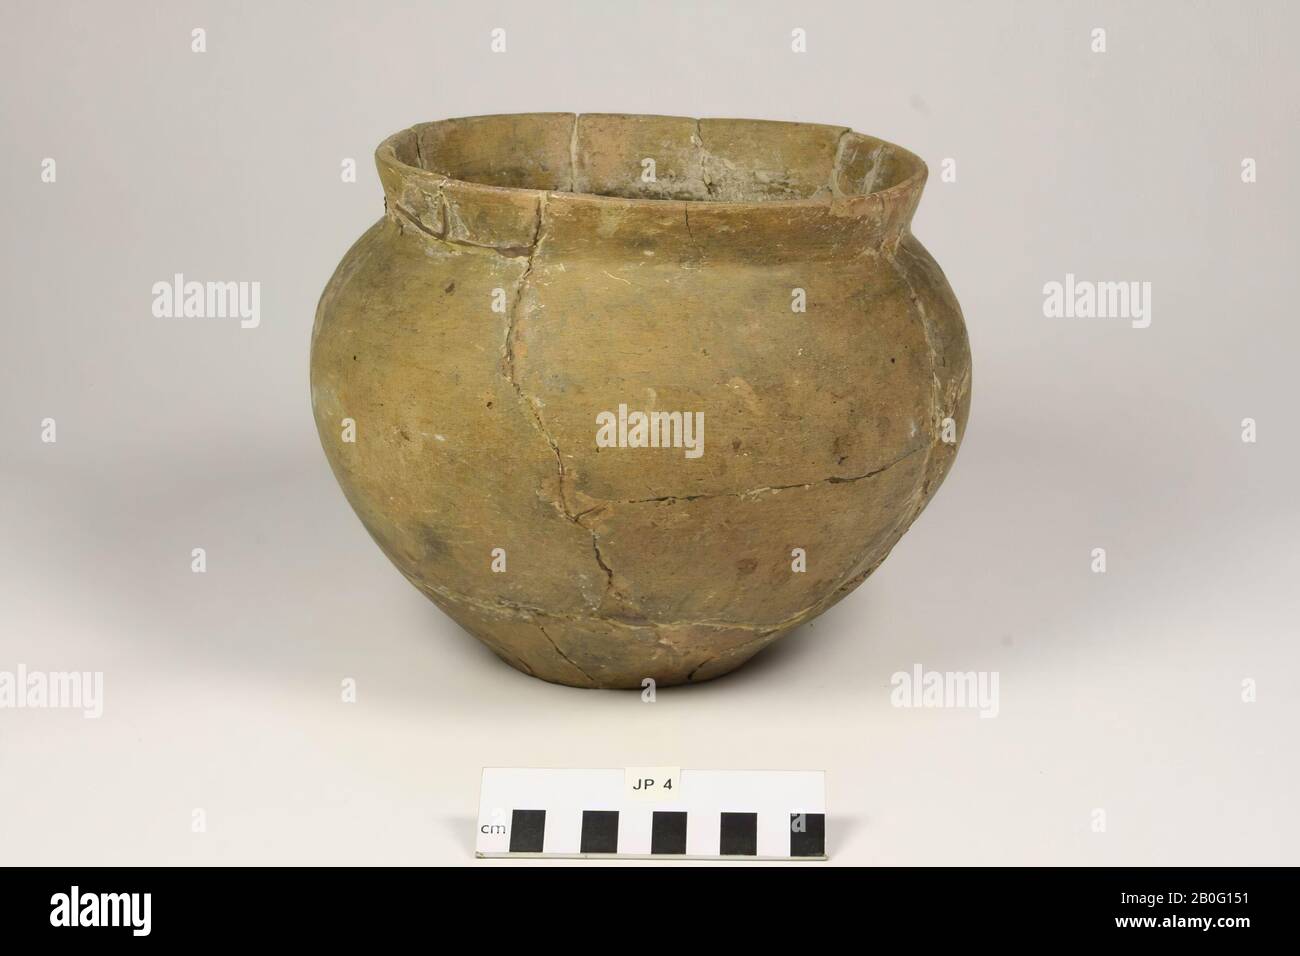 Pot of earthenware. Old bondings and additions., Pot, earthenware, h: 17,4 cm, diam: 21,7 cm, prehistory, Germany, North Rhine-Westphalia Stock Photo